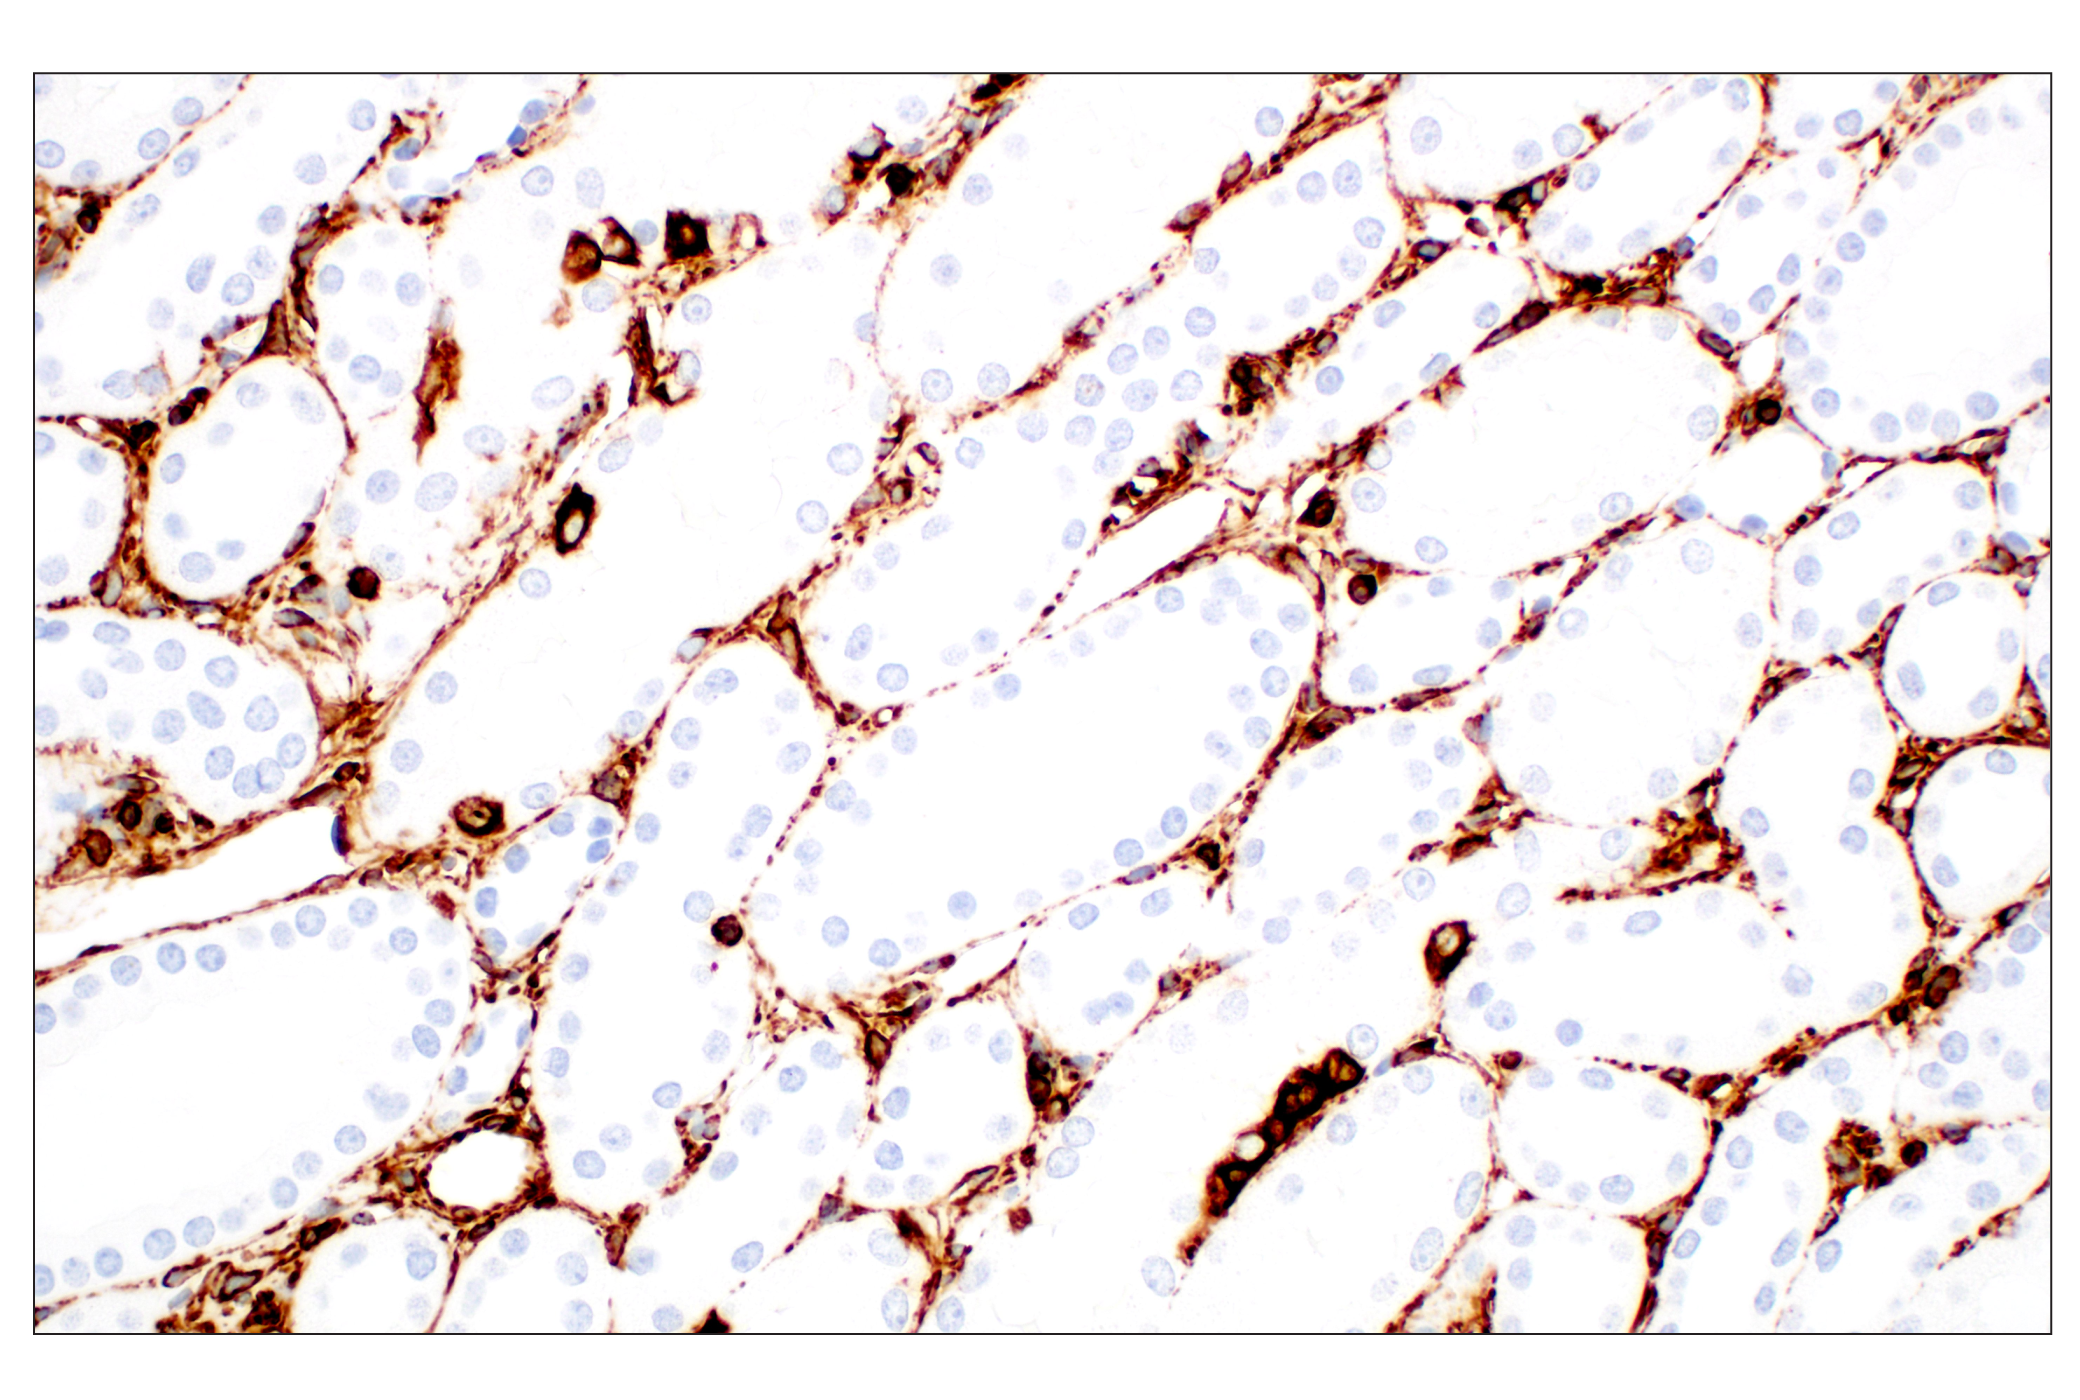  Image 49: Epithelial-Mesenchymal Transition (EMT) IF Antibody Sampler Kit